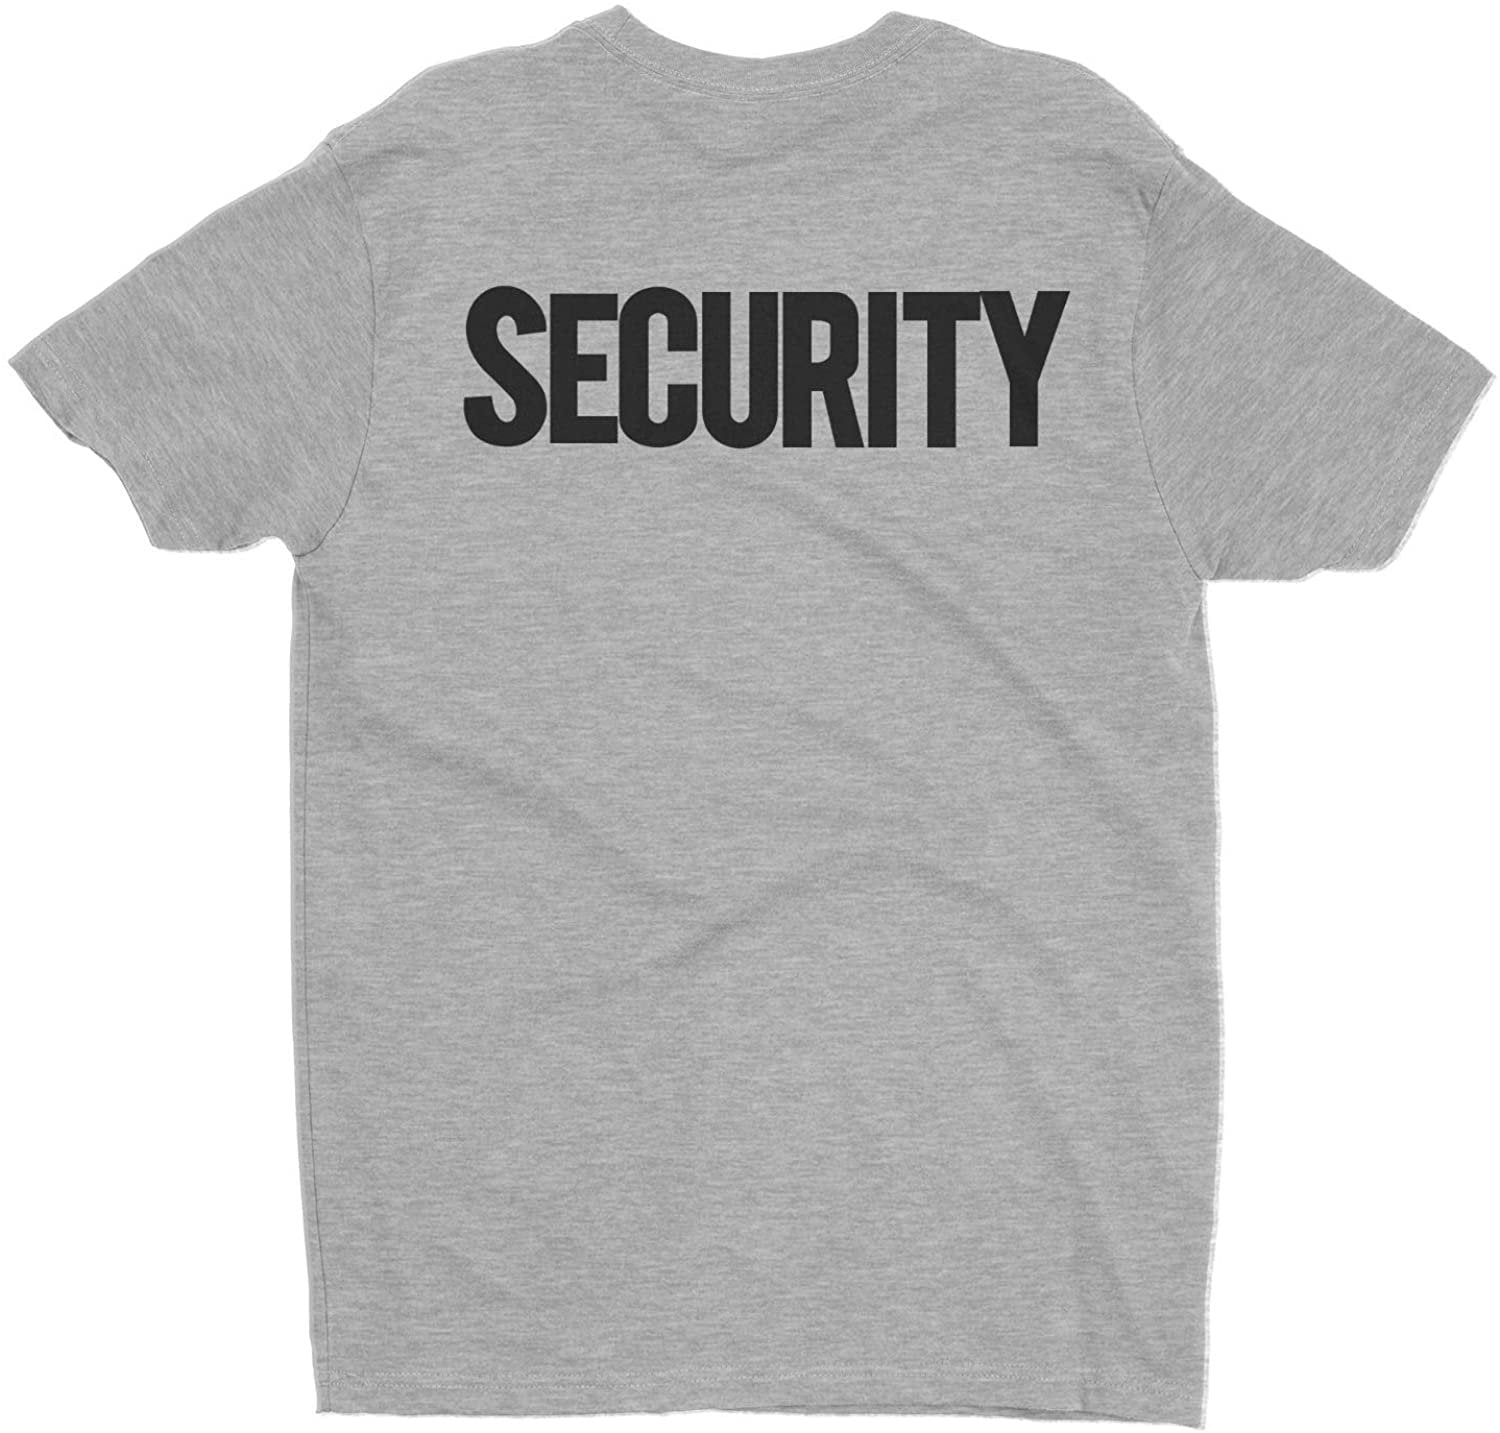 Men's Security T-Shirt (Premium Ringspun Cotton, Heather Gray/Black)